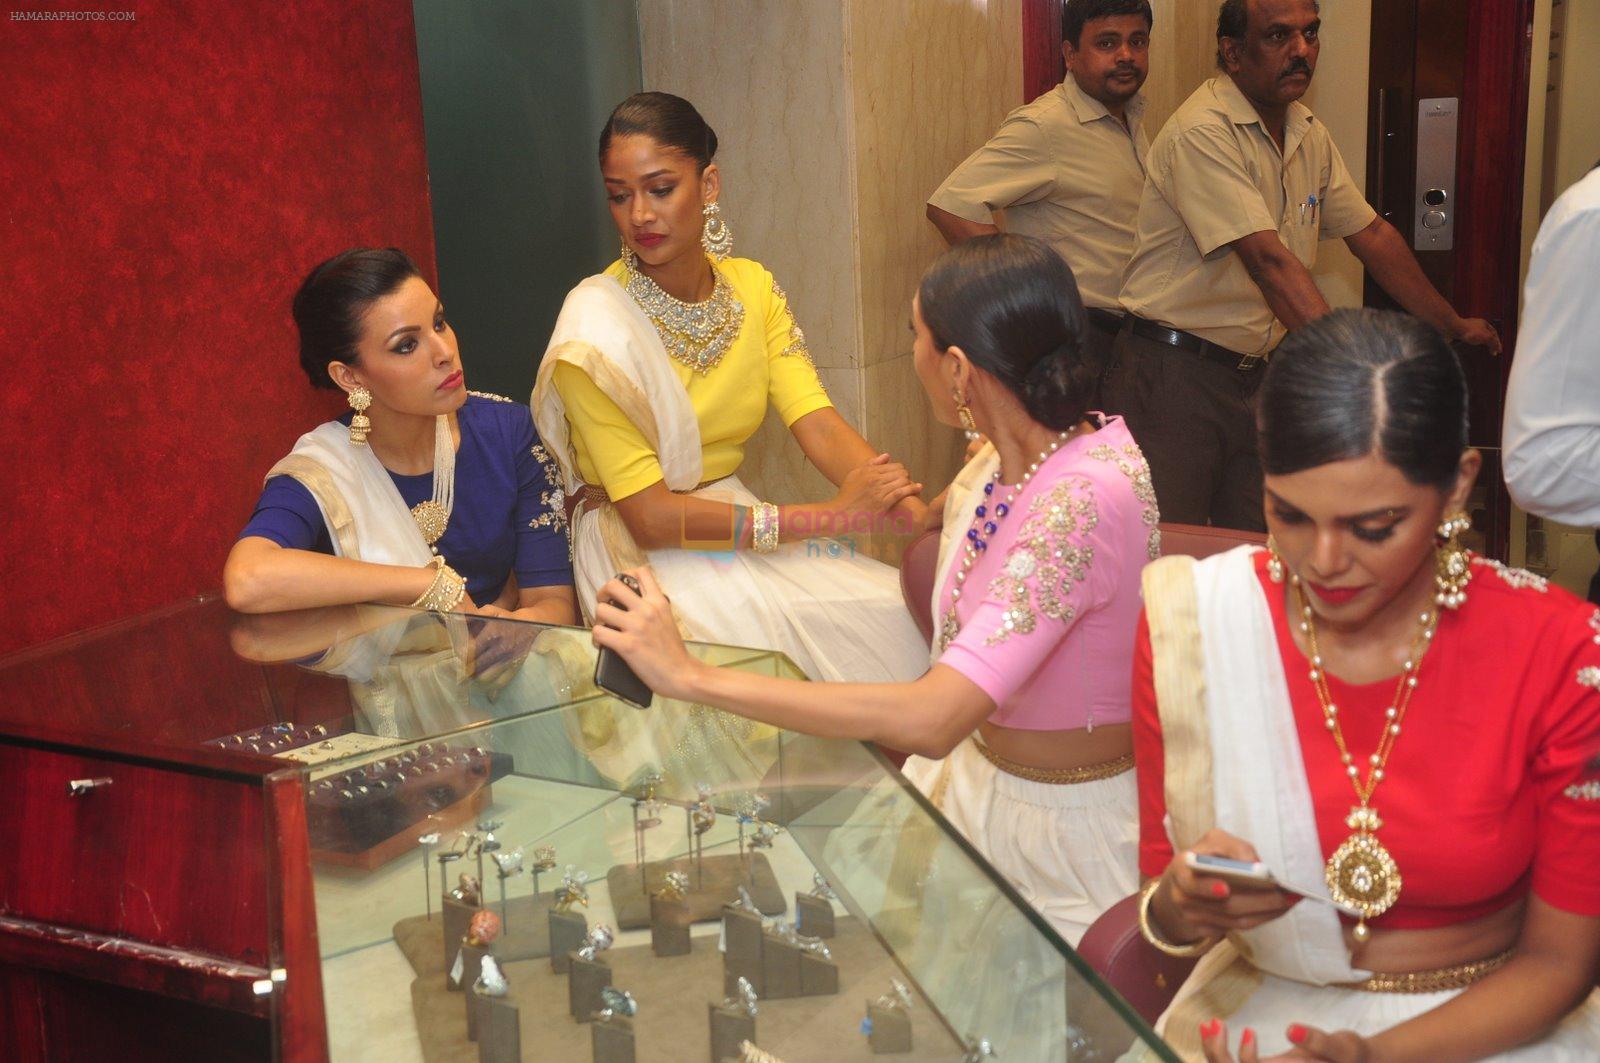 Deepti Gujral, Carol Gracias, Candice Pinto at Notandas store in bandra, Mumbai on 27th Nov 2014